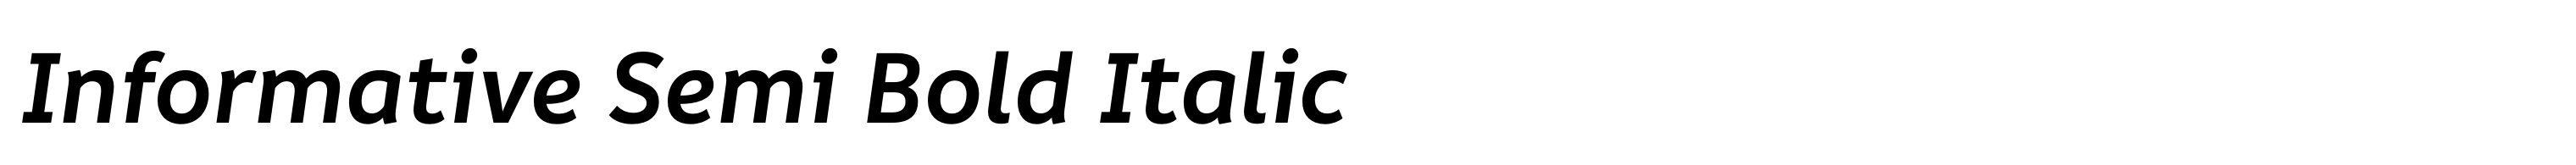 Informative Semi Bold Italic